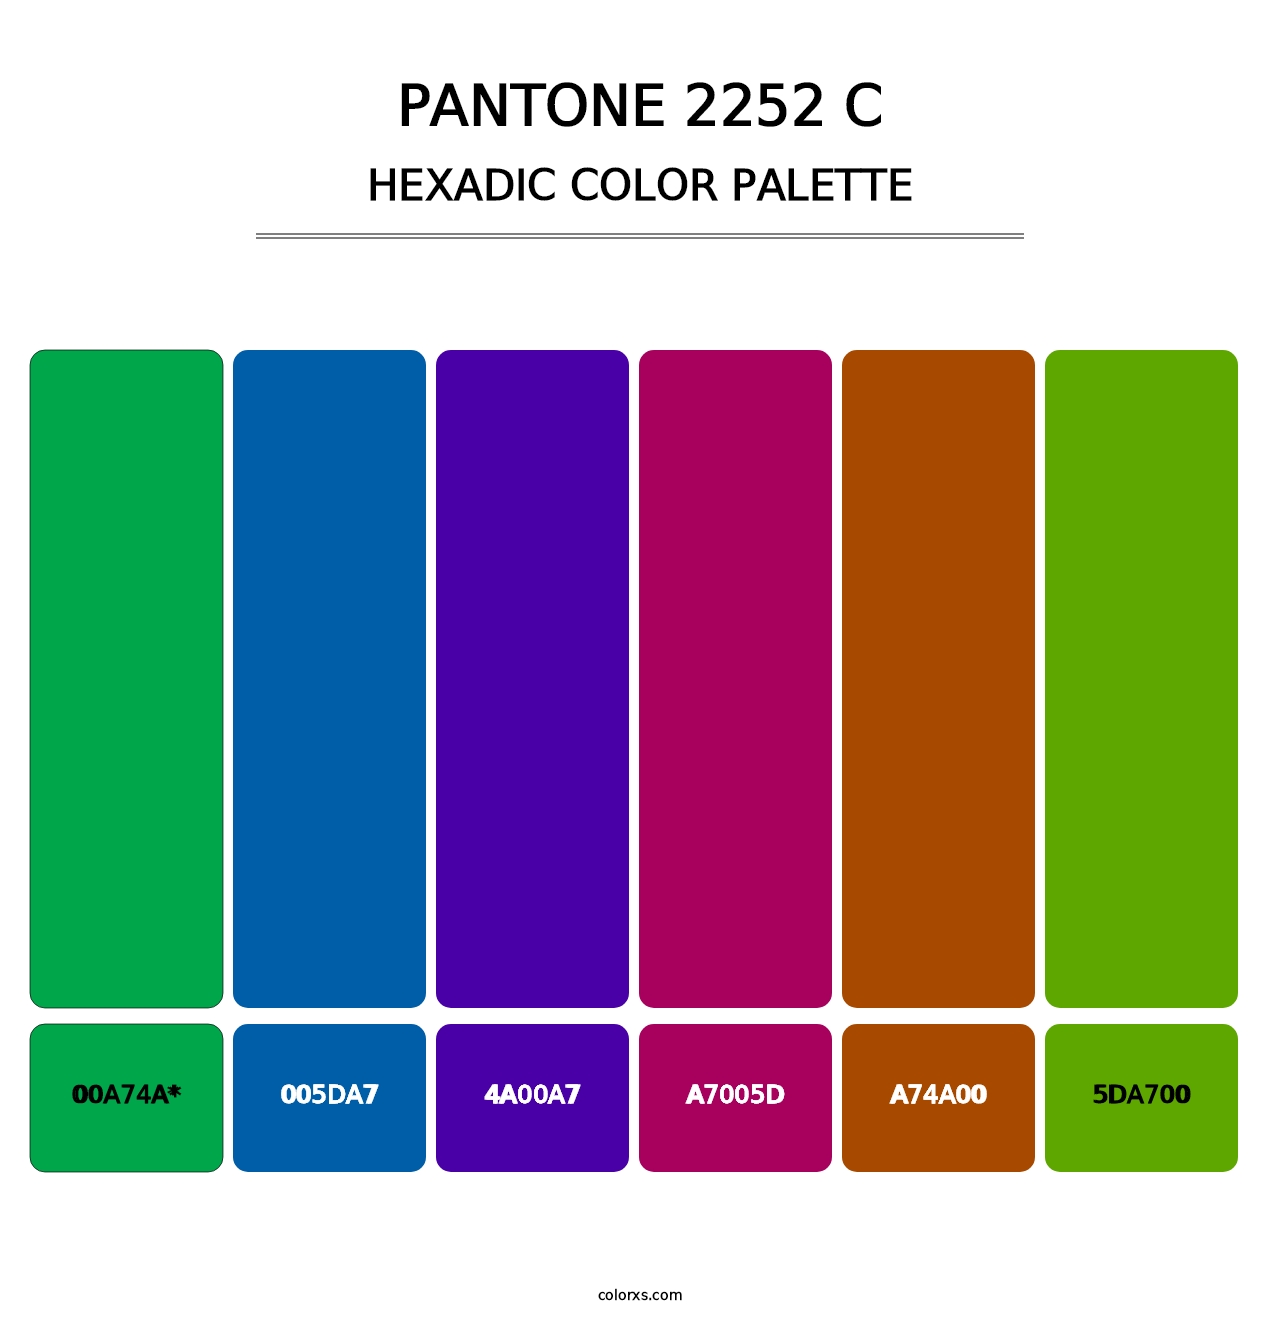 PANTONE 2252 C - Hexadic Color Palette